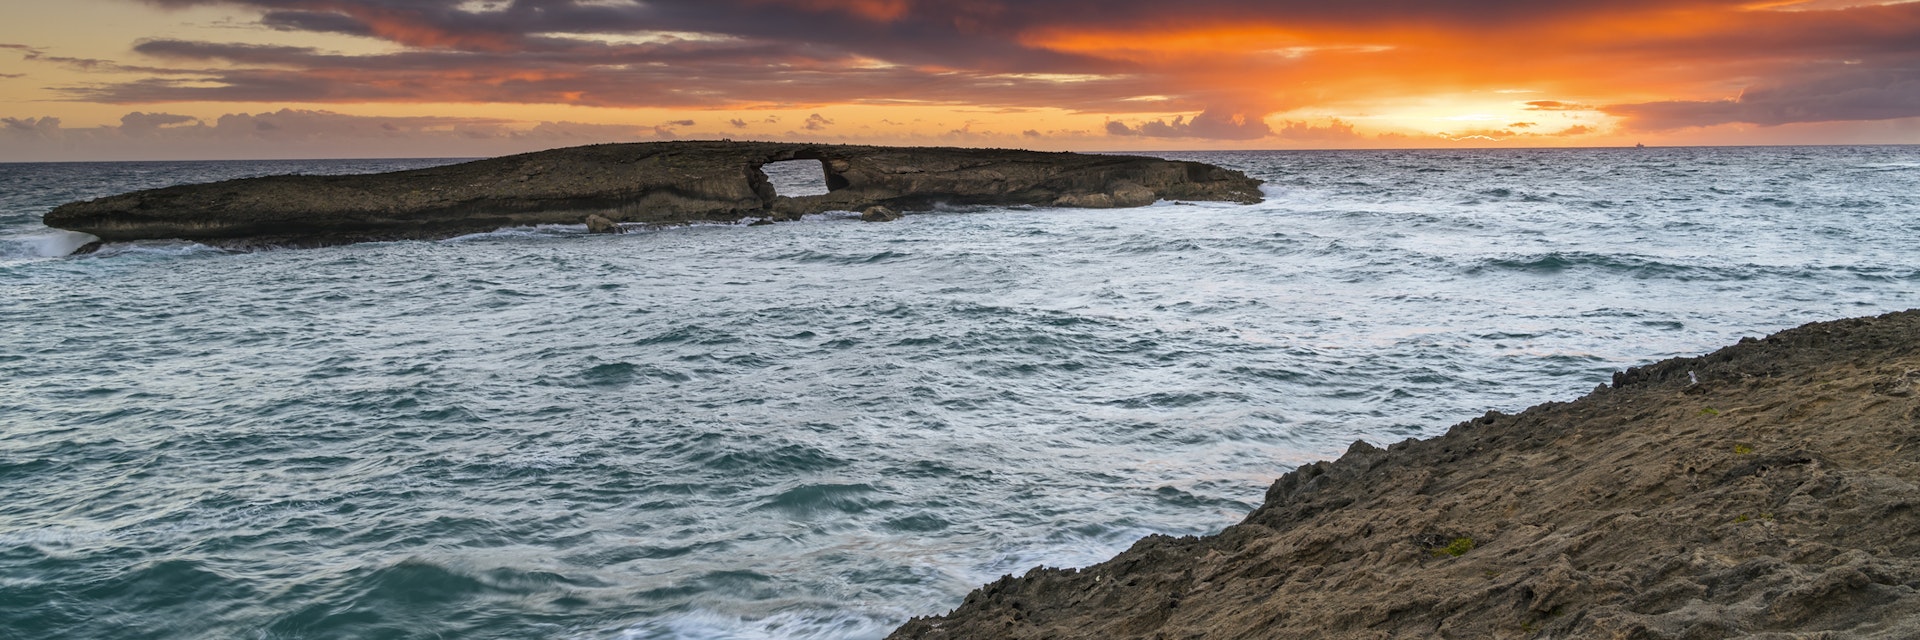 Landscape photograph of Kukuiho'olua
1814058291
wave, waves, rock, sunrise, paradise, tropical, surf, clouds, hawaii, shore, cloud, hawaiian, laie point, laie, puka, hawaiian style, kukuiho'olua, kukuiho'olua island, puka rock